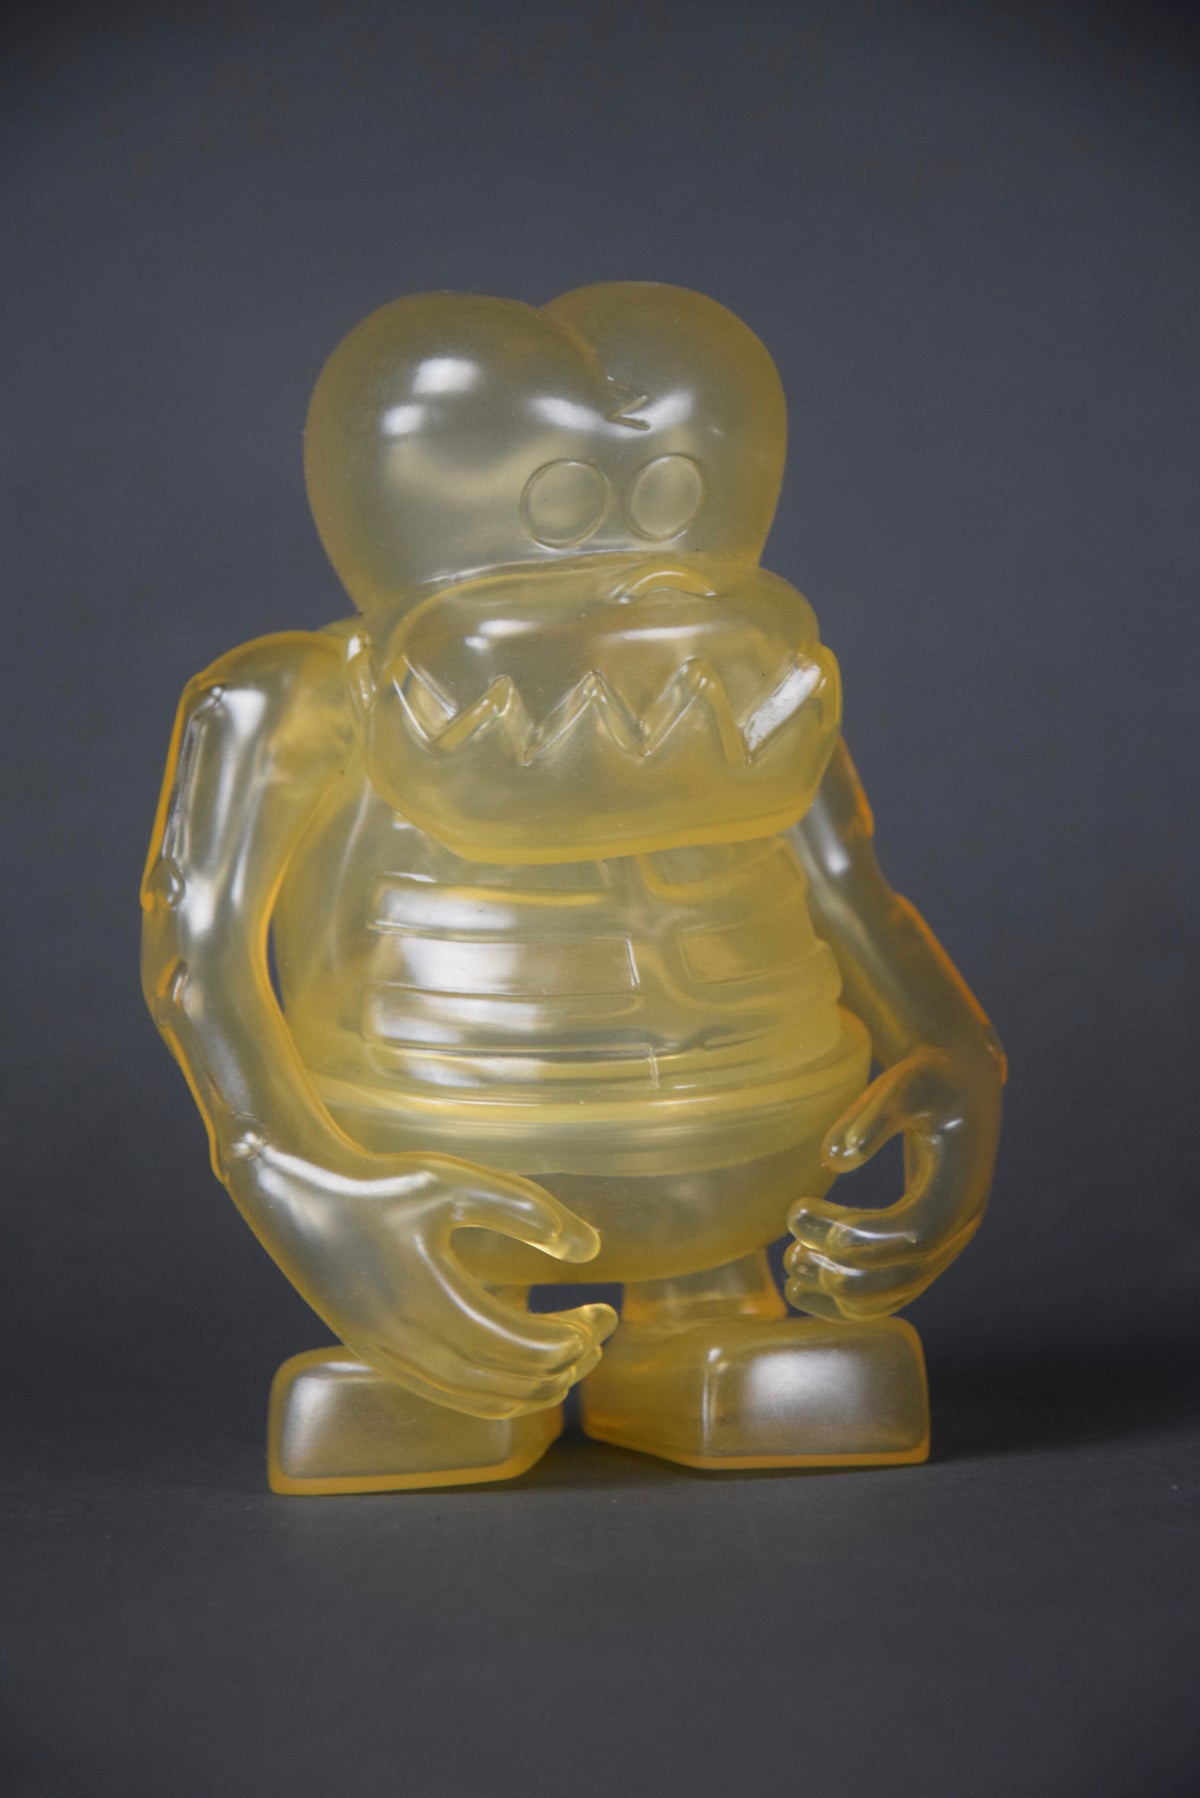 1997 Designer Toy Skull by Bounty Hunter BxH Made in Japan